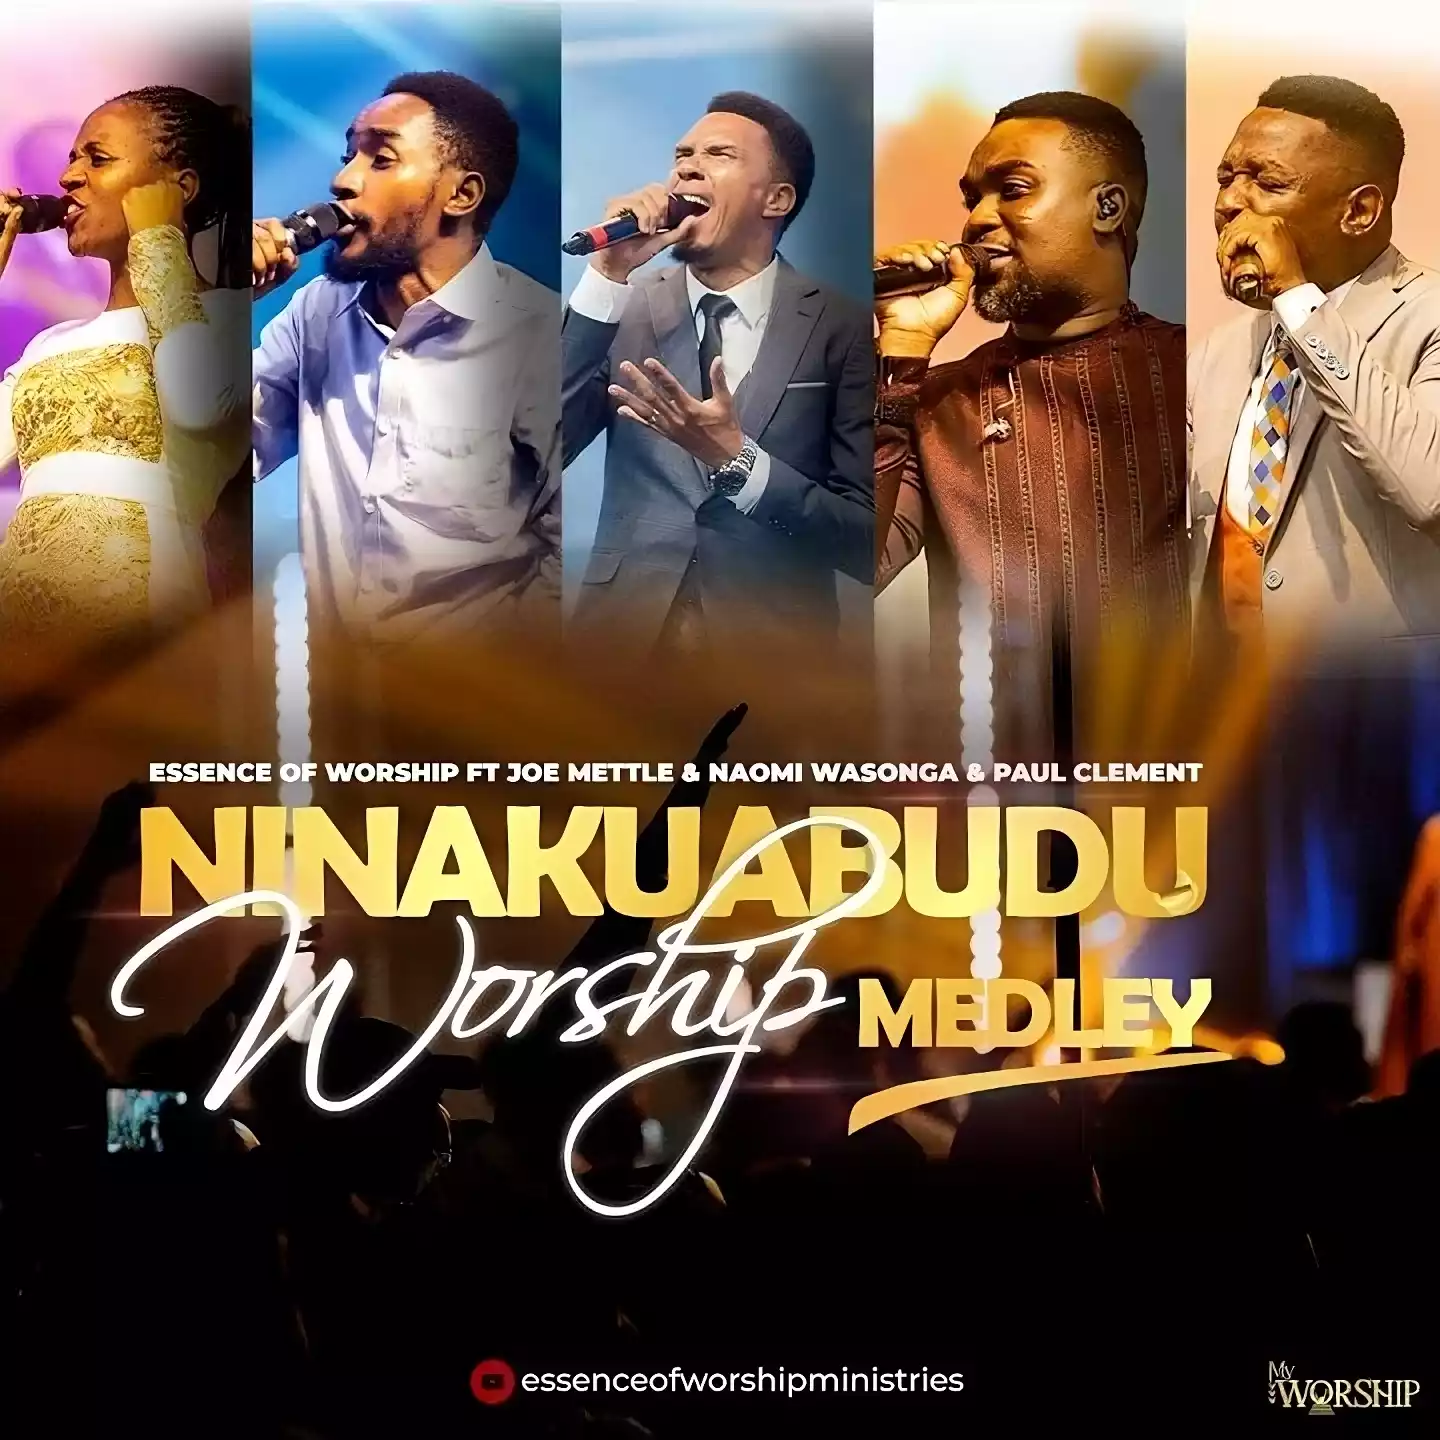 Essence Of Worship ft Joe Mettle, Paul Clement & Naomi Wasonga - Nakuabudu Mp3 Download